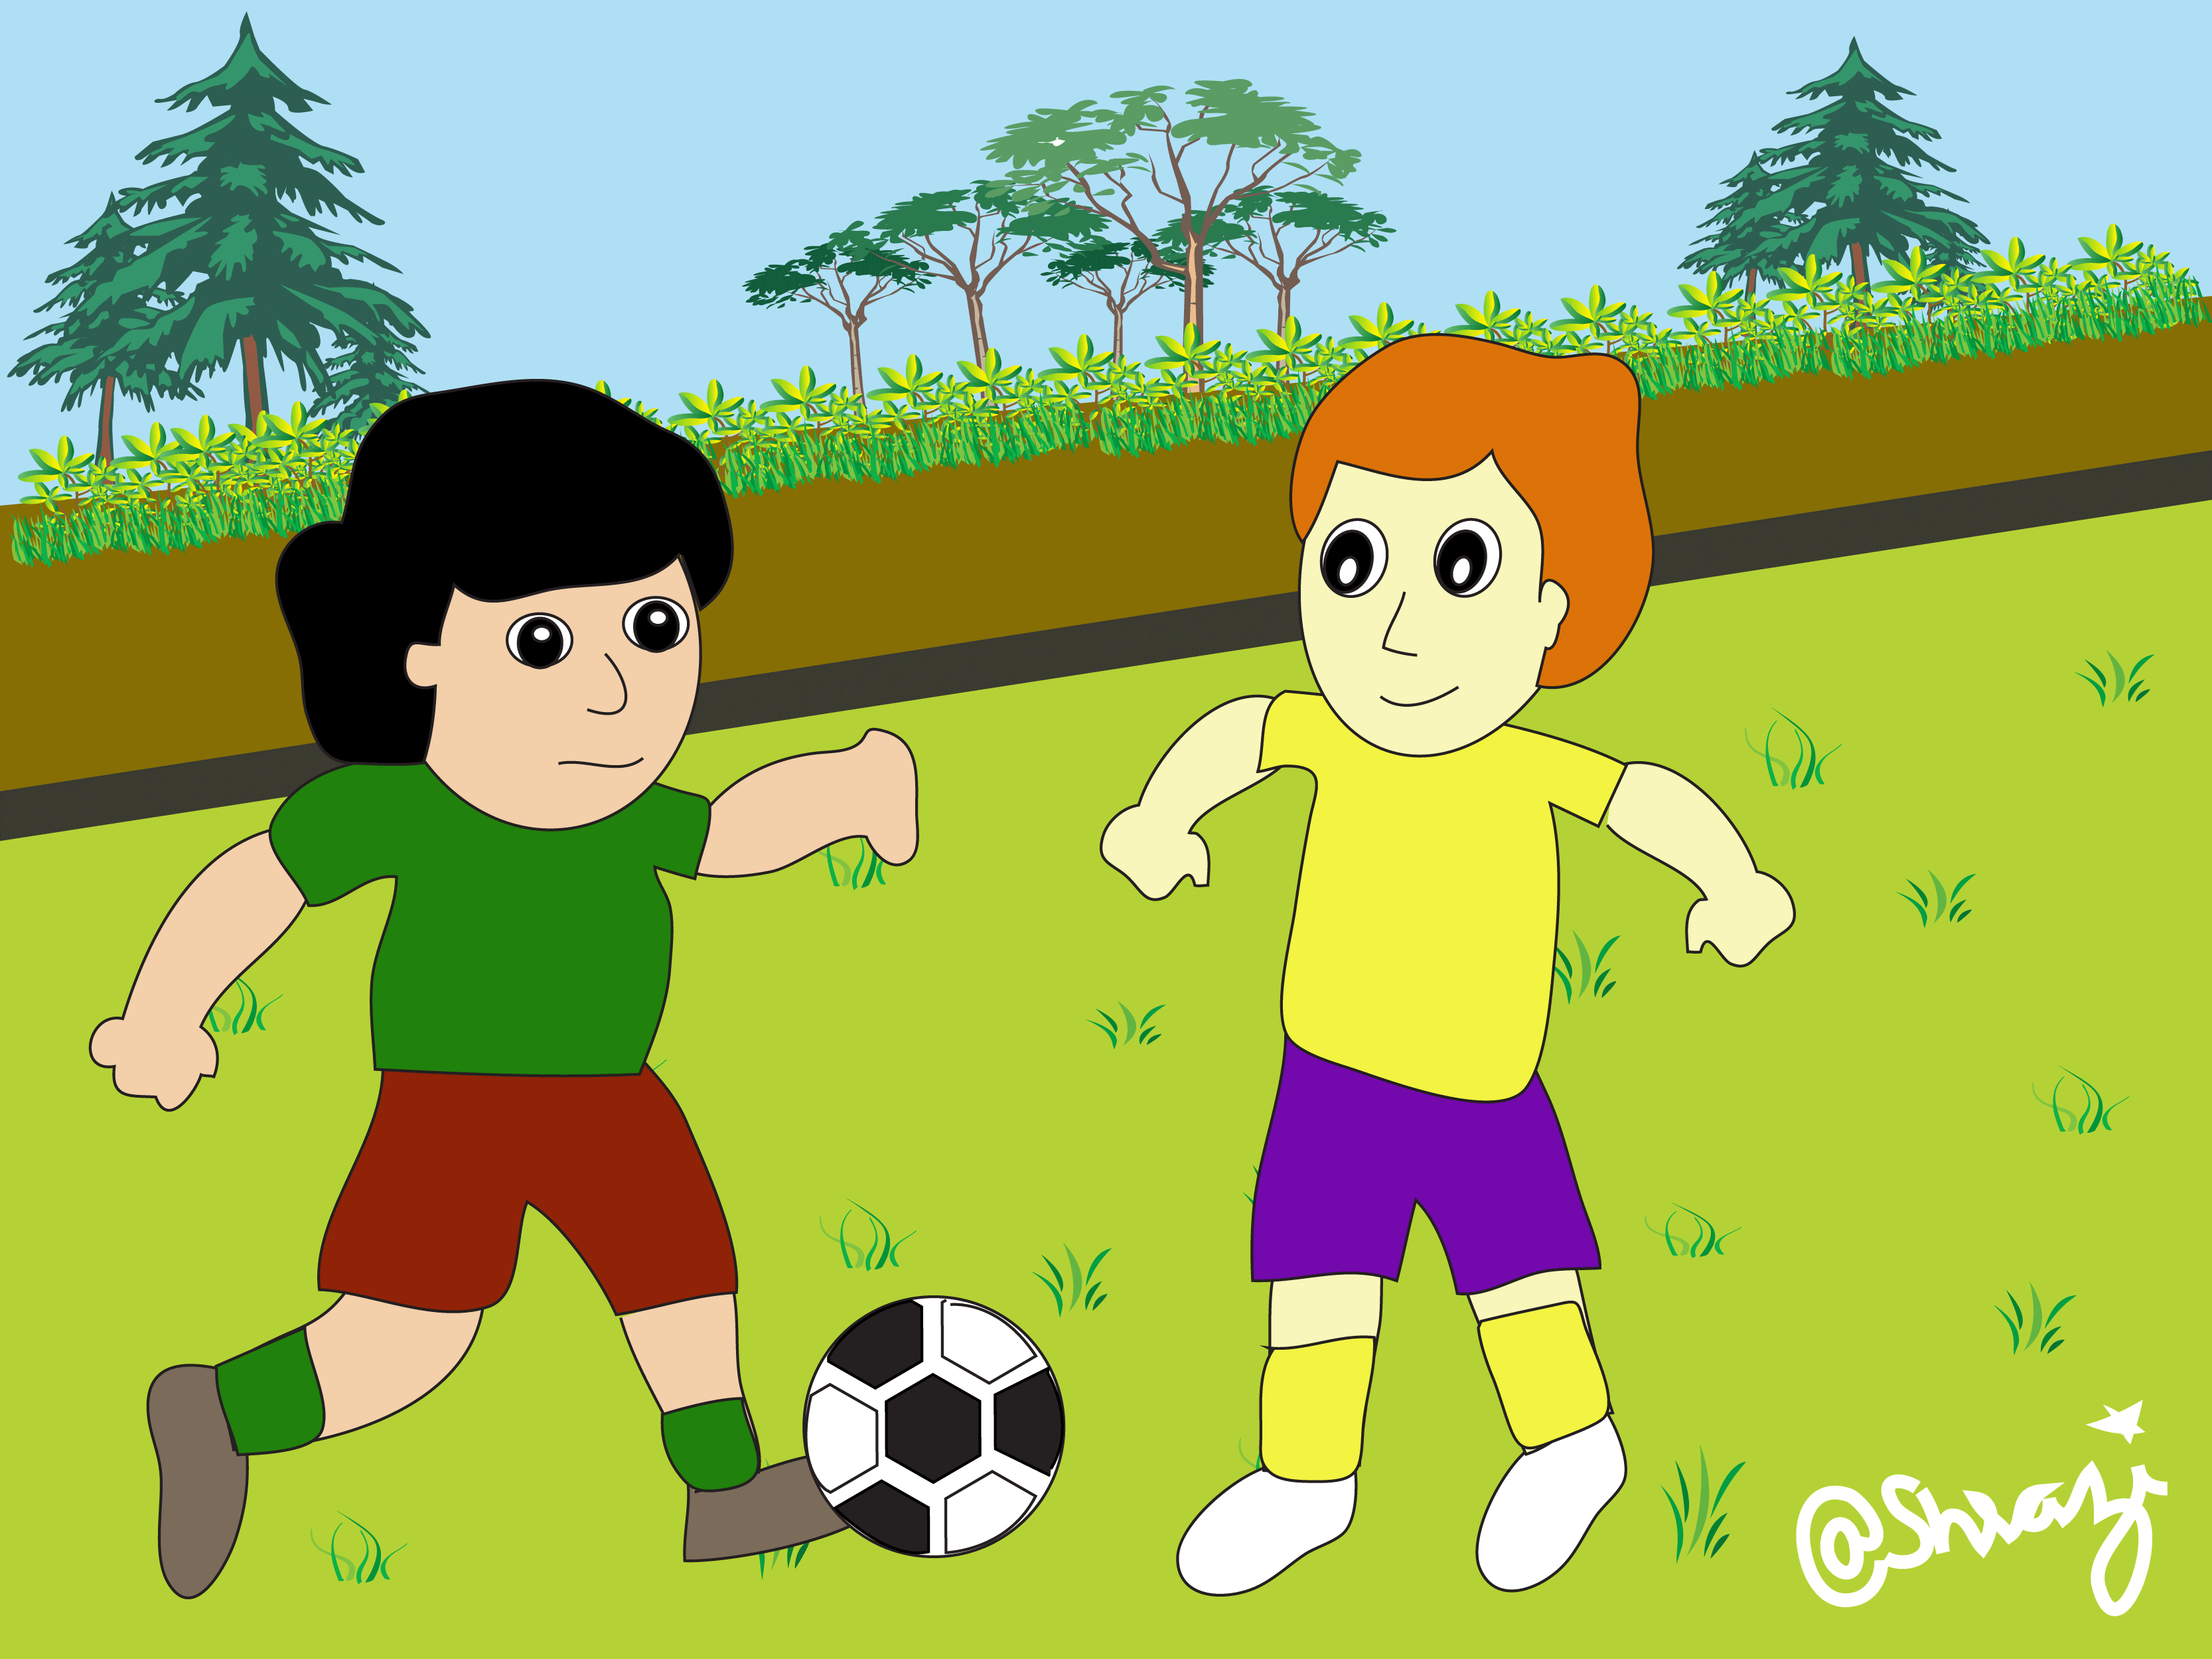 Can they play well. Футбольная анимация. Мультипликация футбол. Анимации для детей футбол. Футболист анимация.